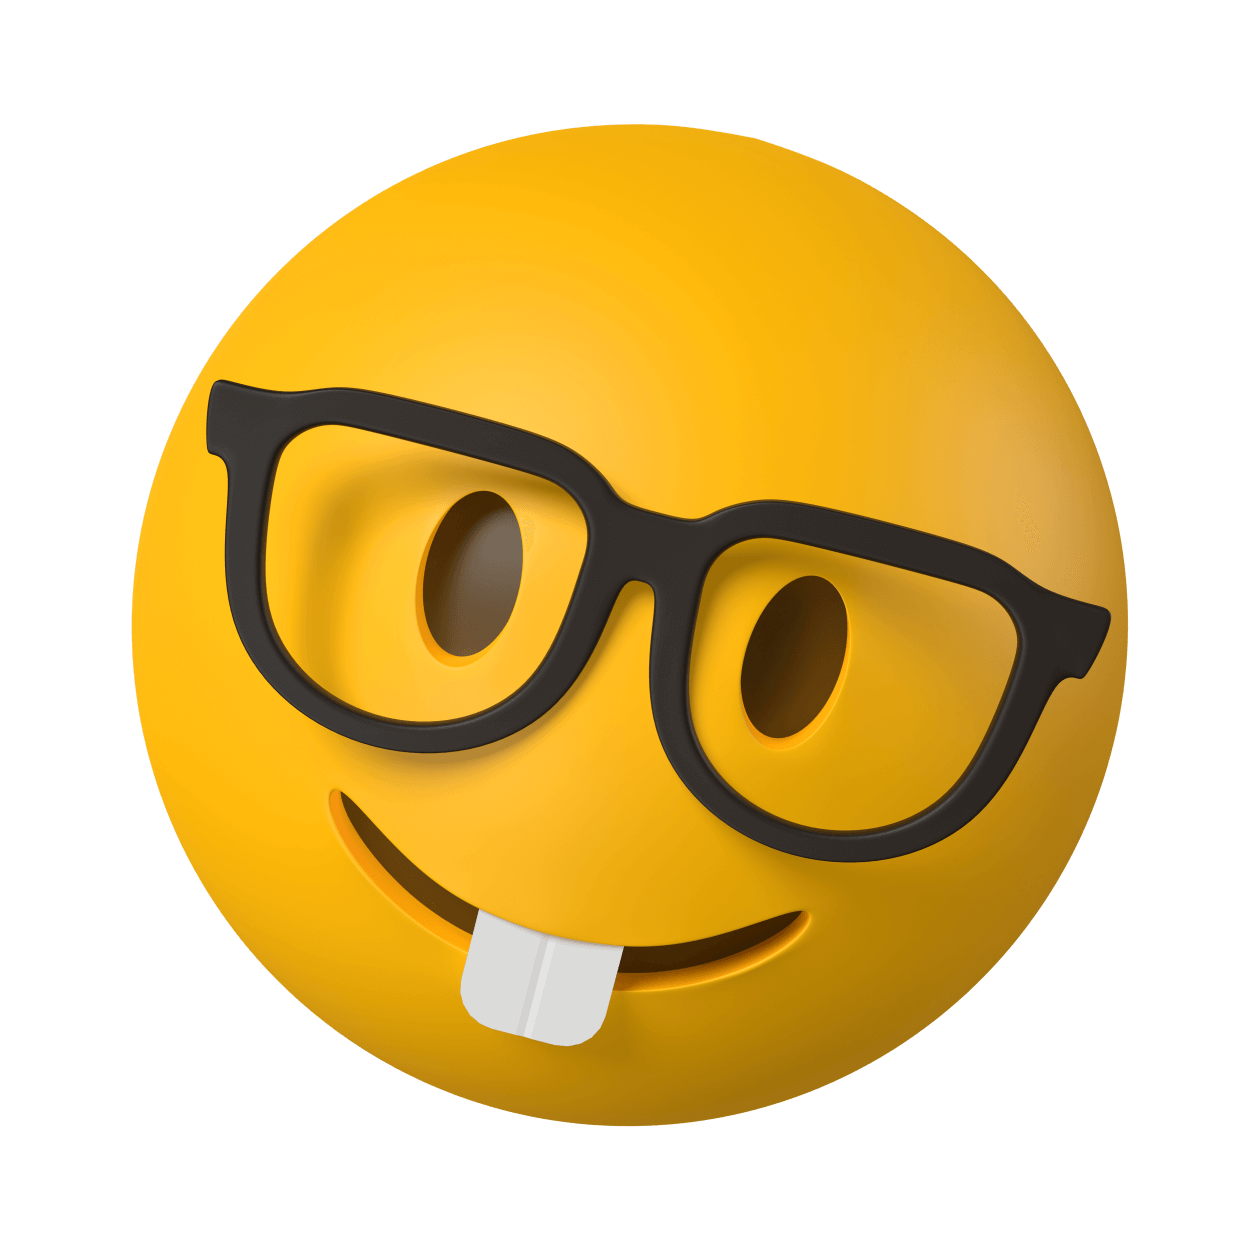 3D Emoji PNG Transparent Images - PNG All